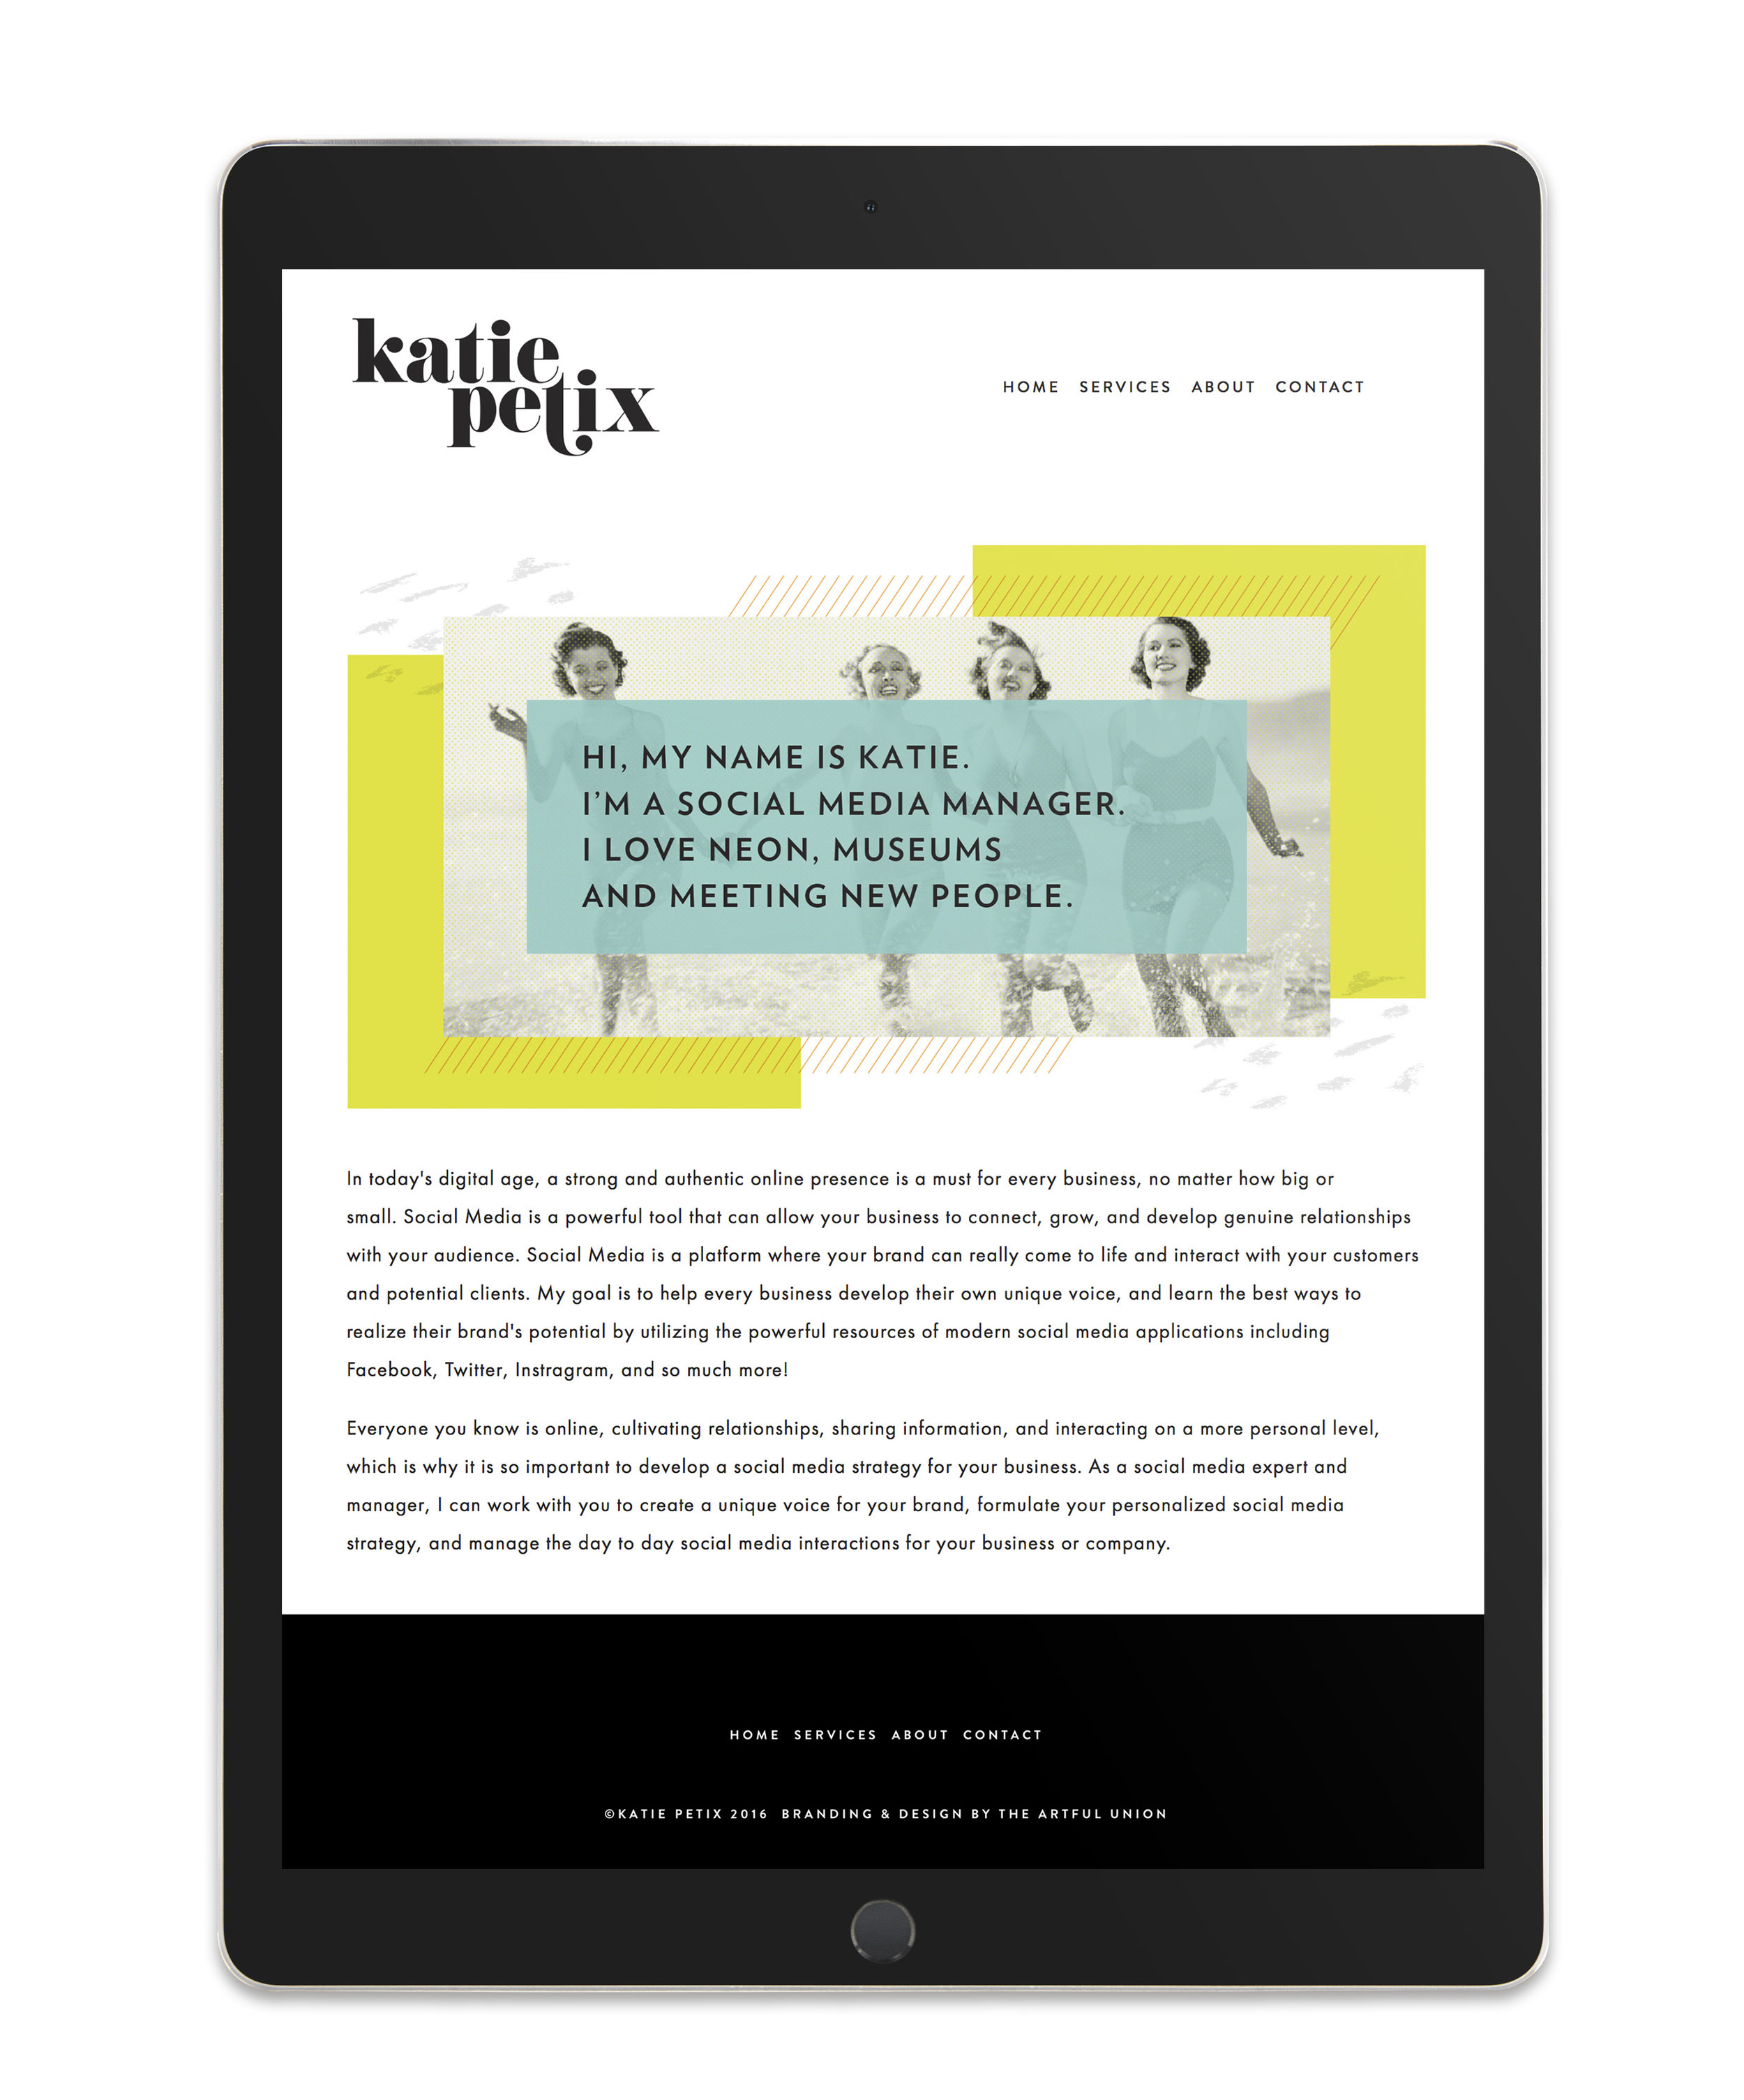 Fun and Informative Website design for Social Media Manager Katie Petix